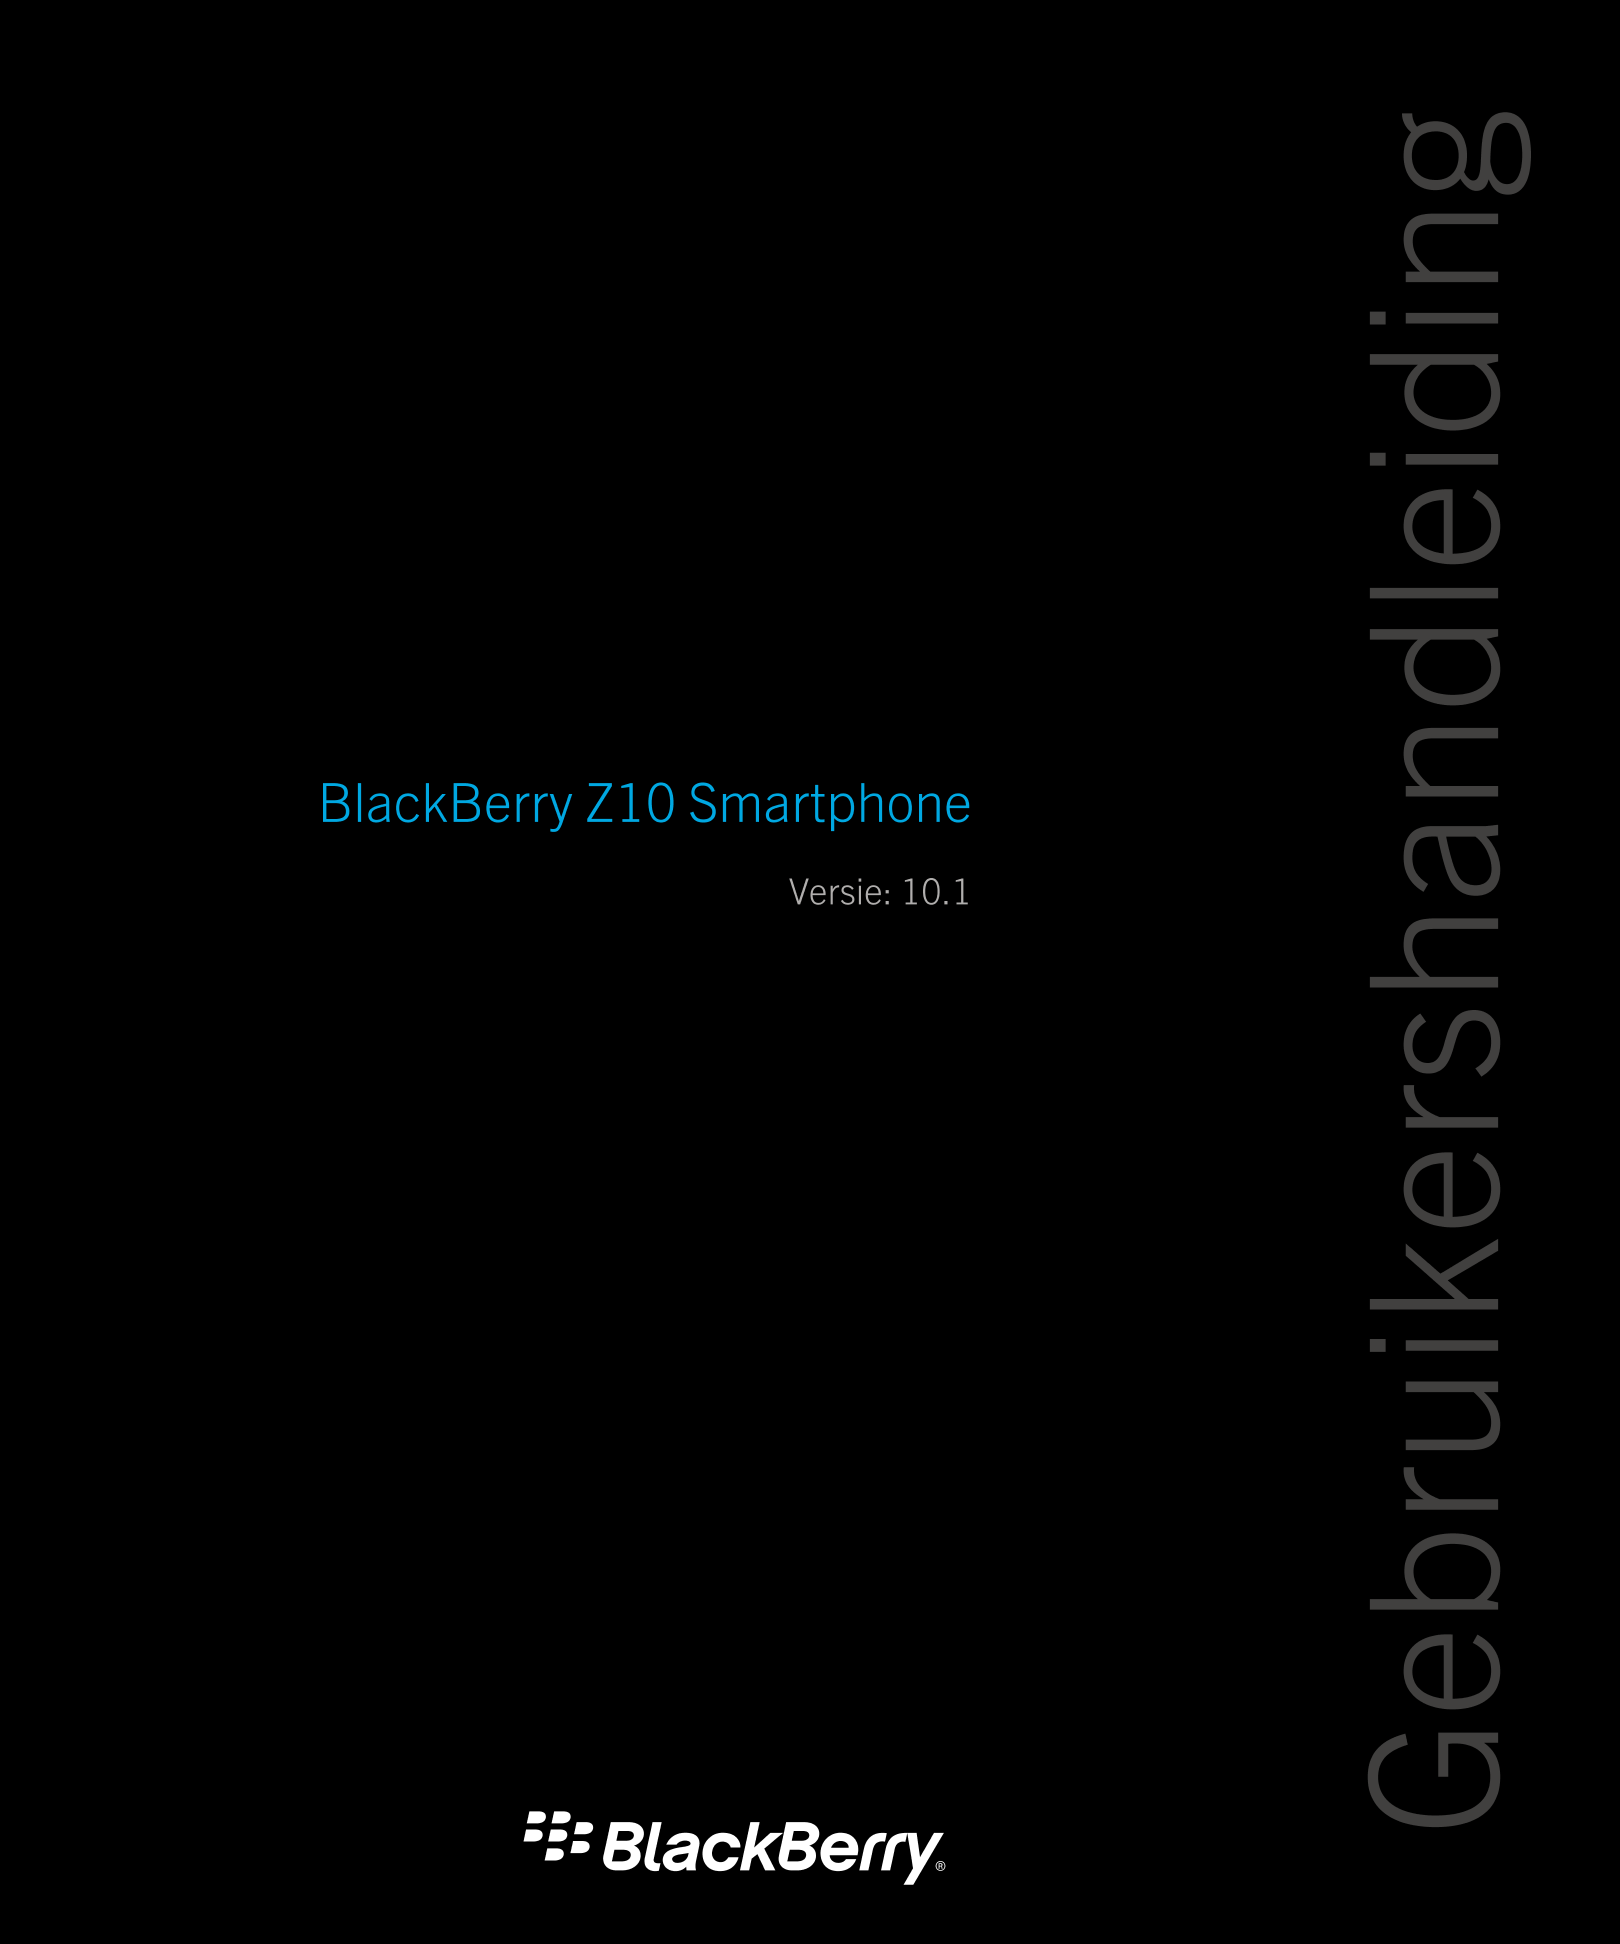 Gebruikershandleiding
BlackBerry Z10 Smartphone
Versie: 10.1